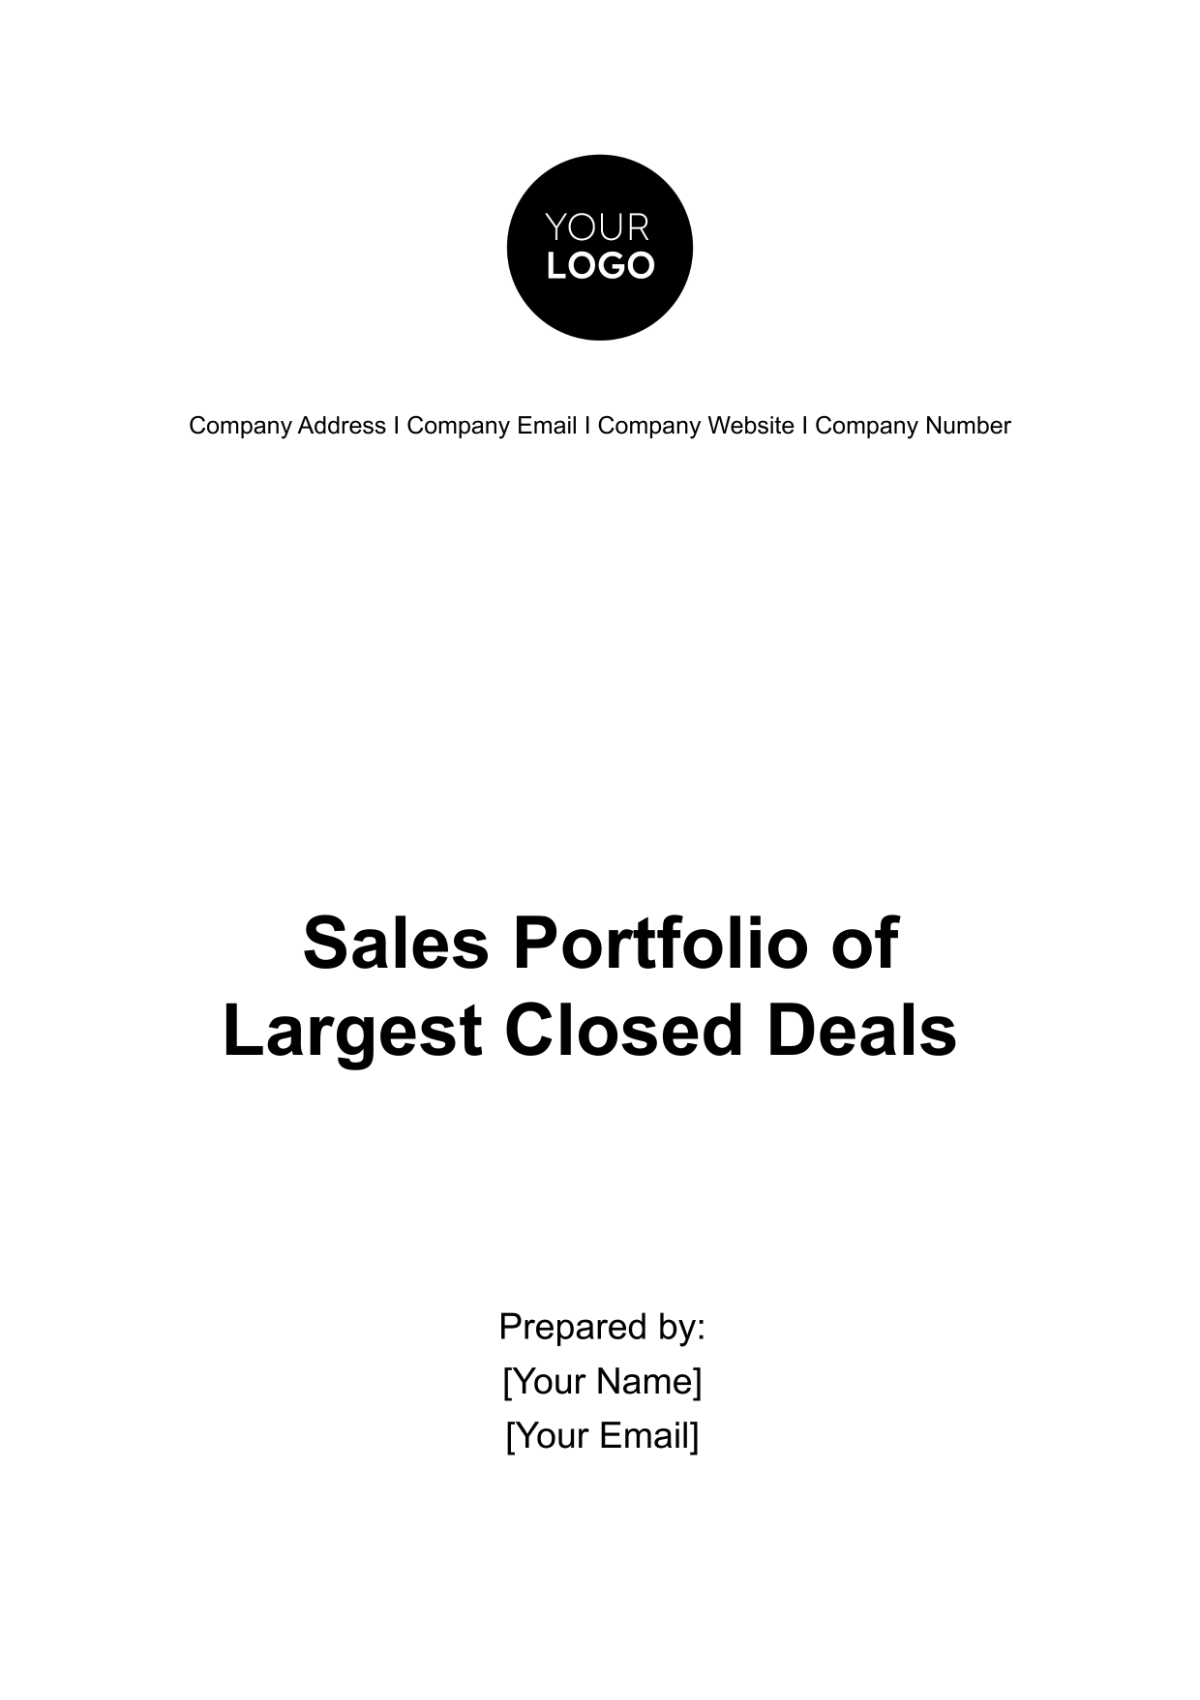 Sales Portfolio of Largest Closed Deals Template